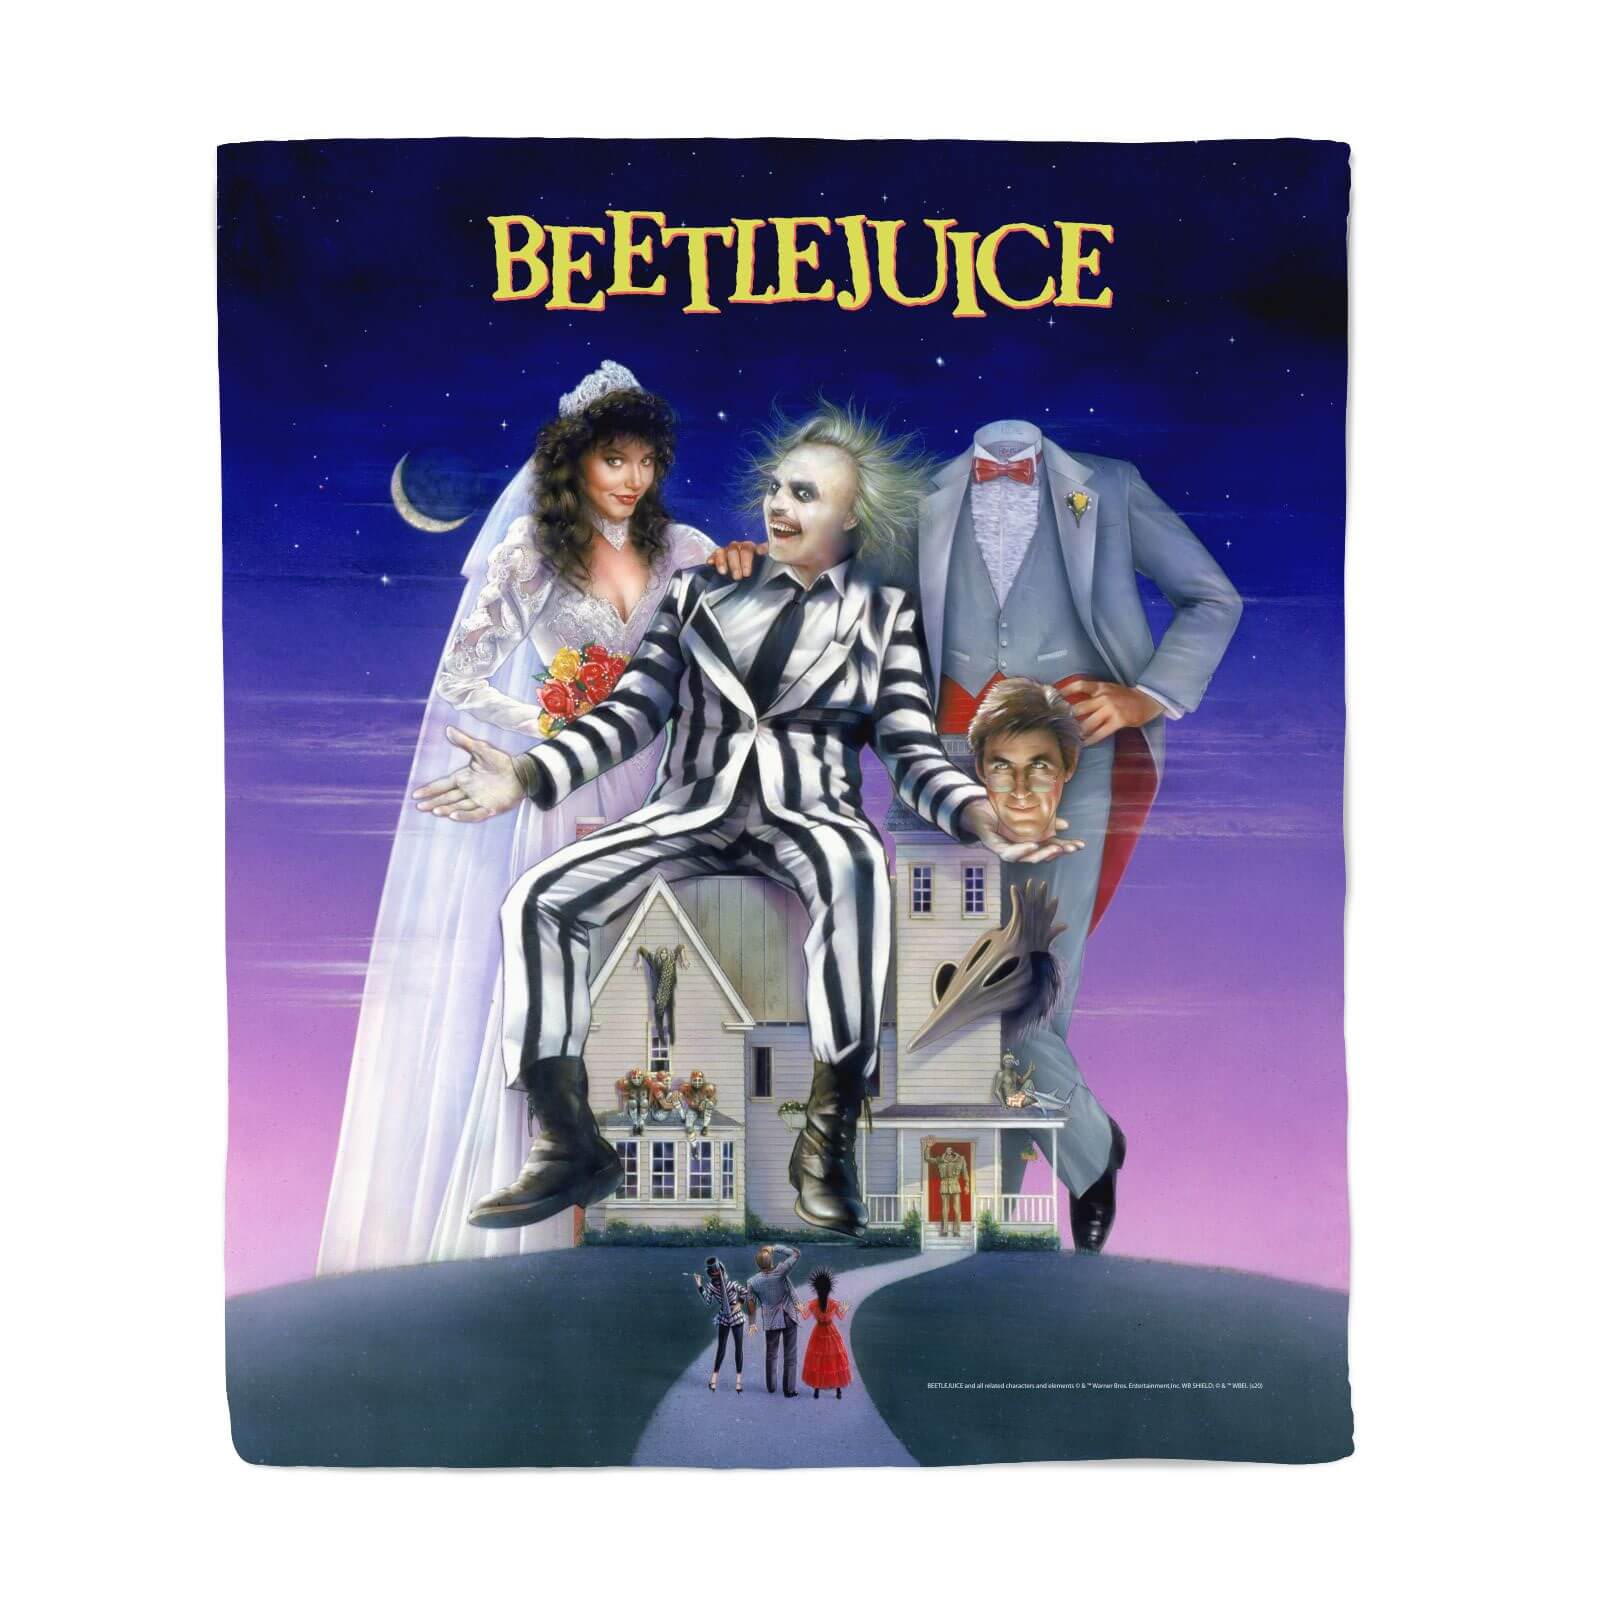 Beetlejuice Poster Fleece Blanket